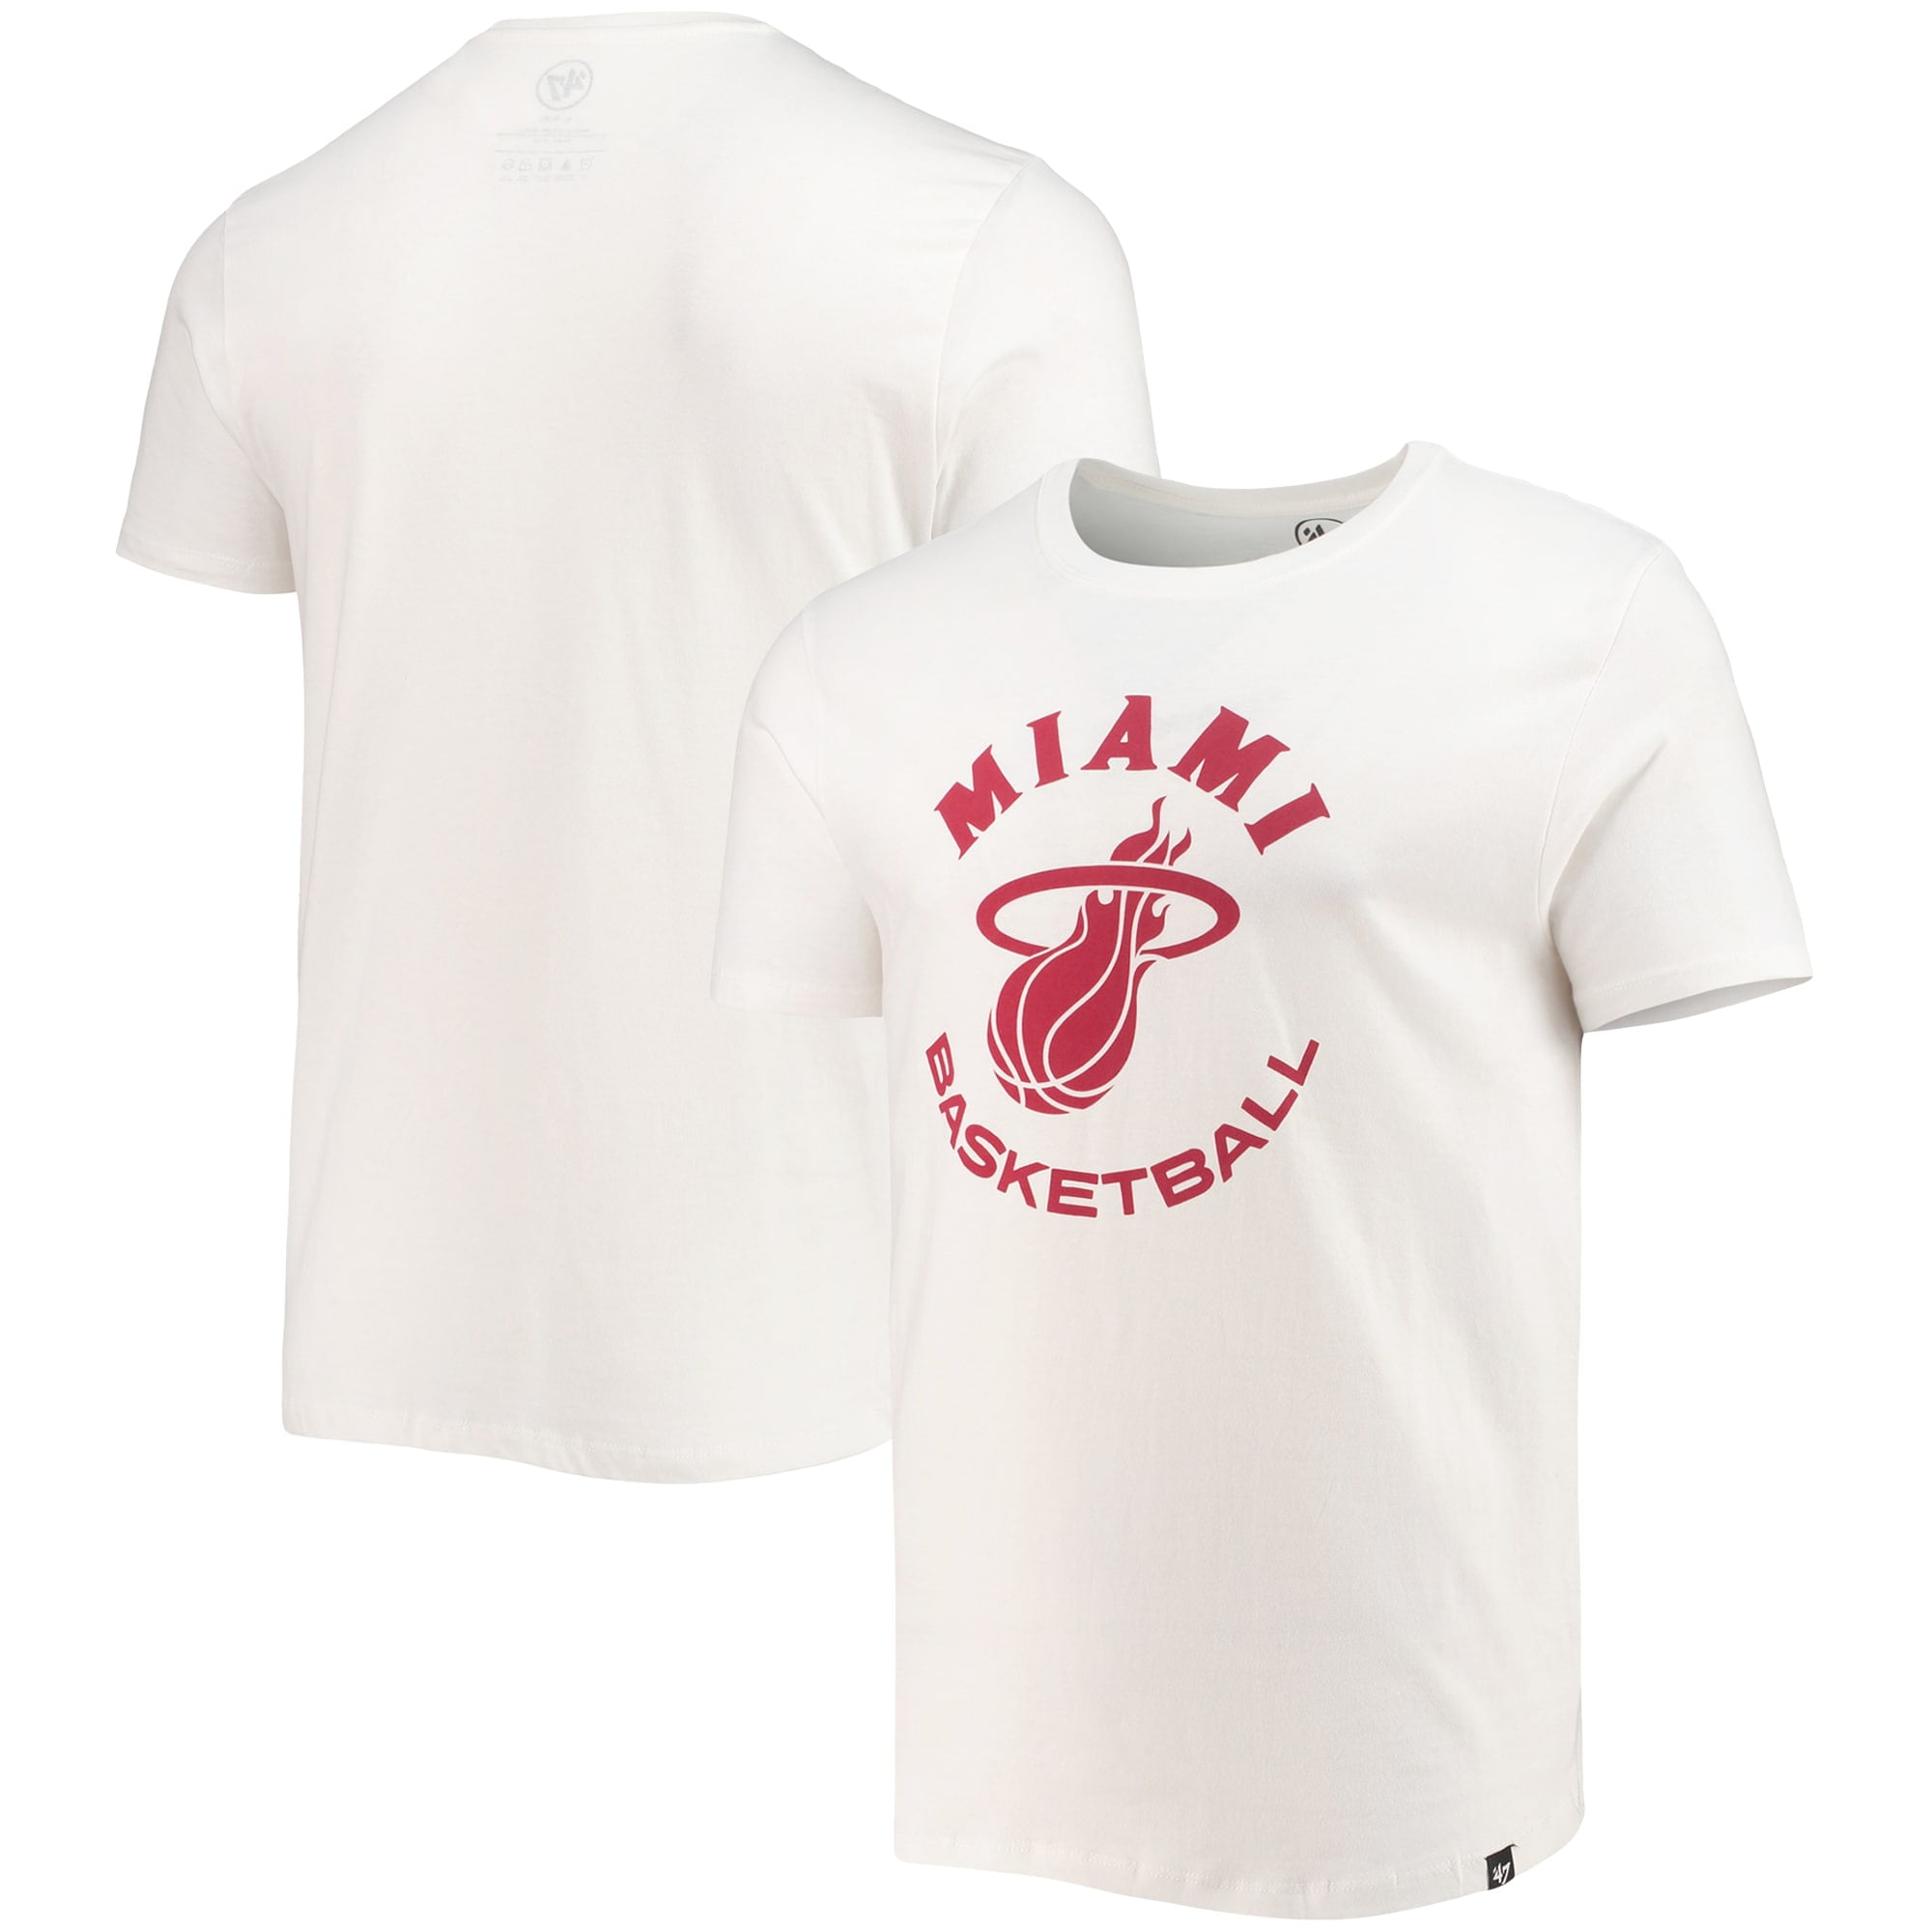 Plus NBA Ultra Game Miami Heat Jersey Dress-3X